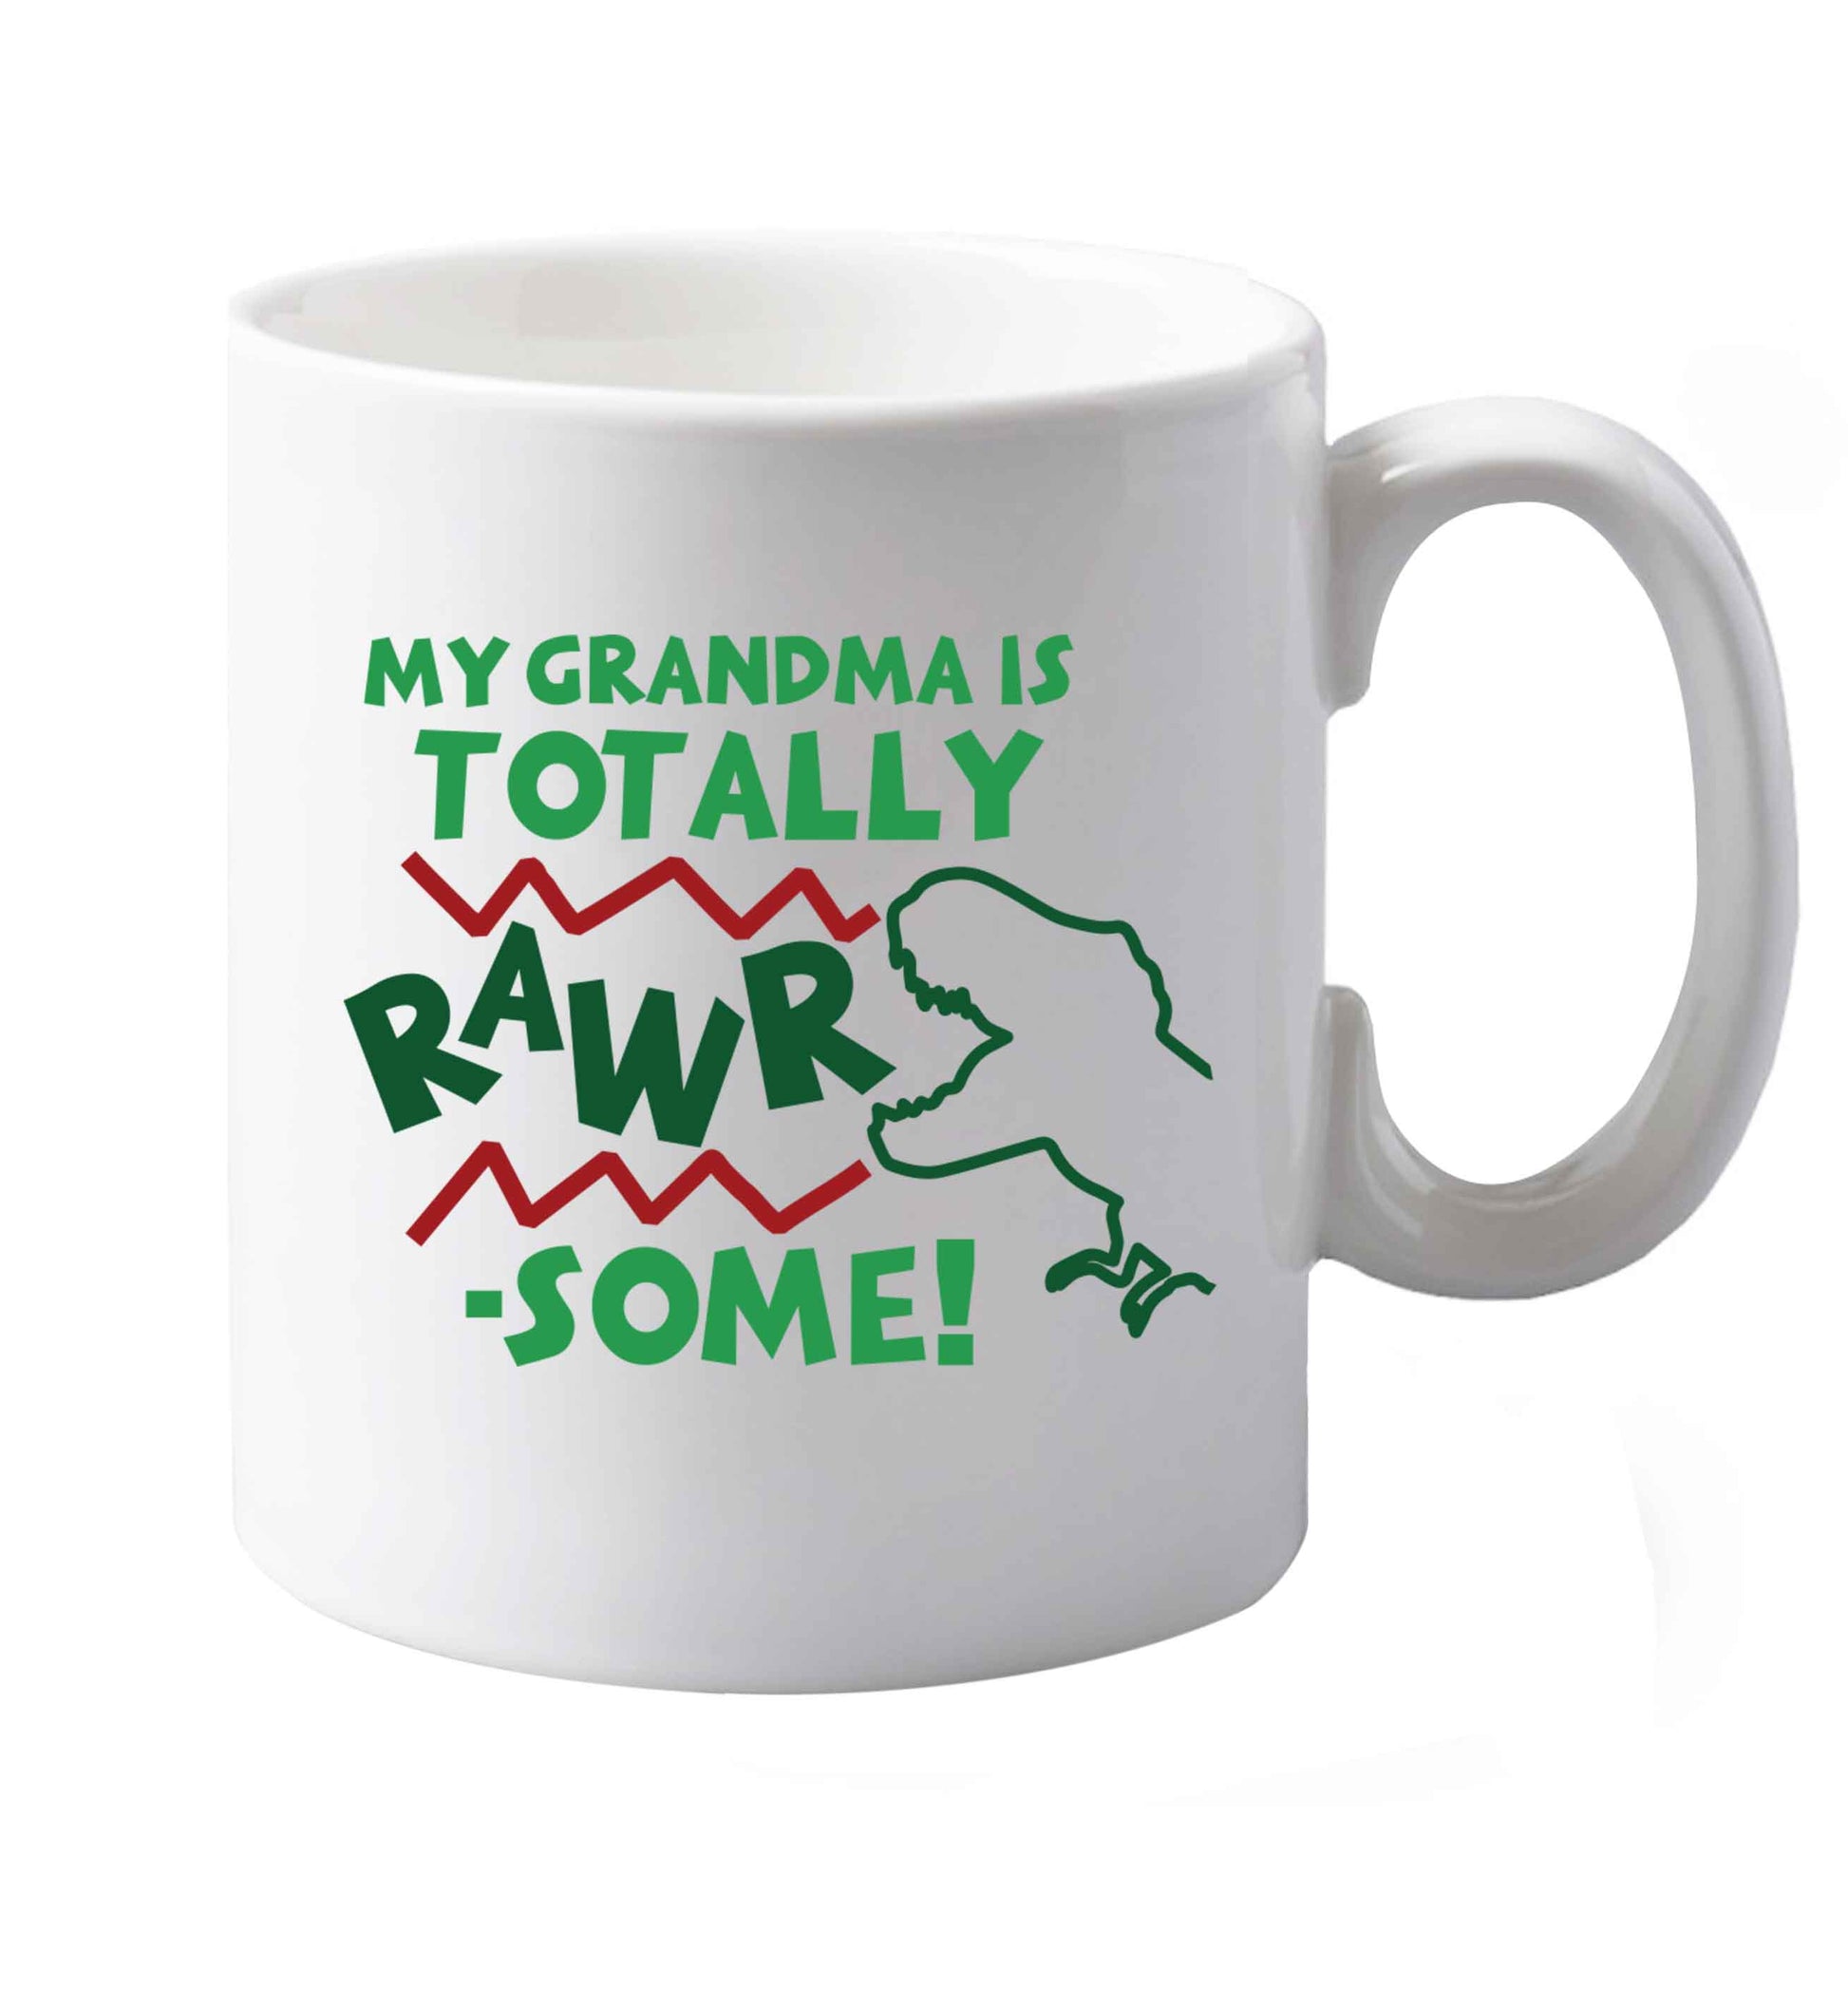 10 oz My grandma is totally rawrsome ceramic mug both sides